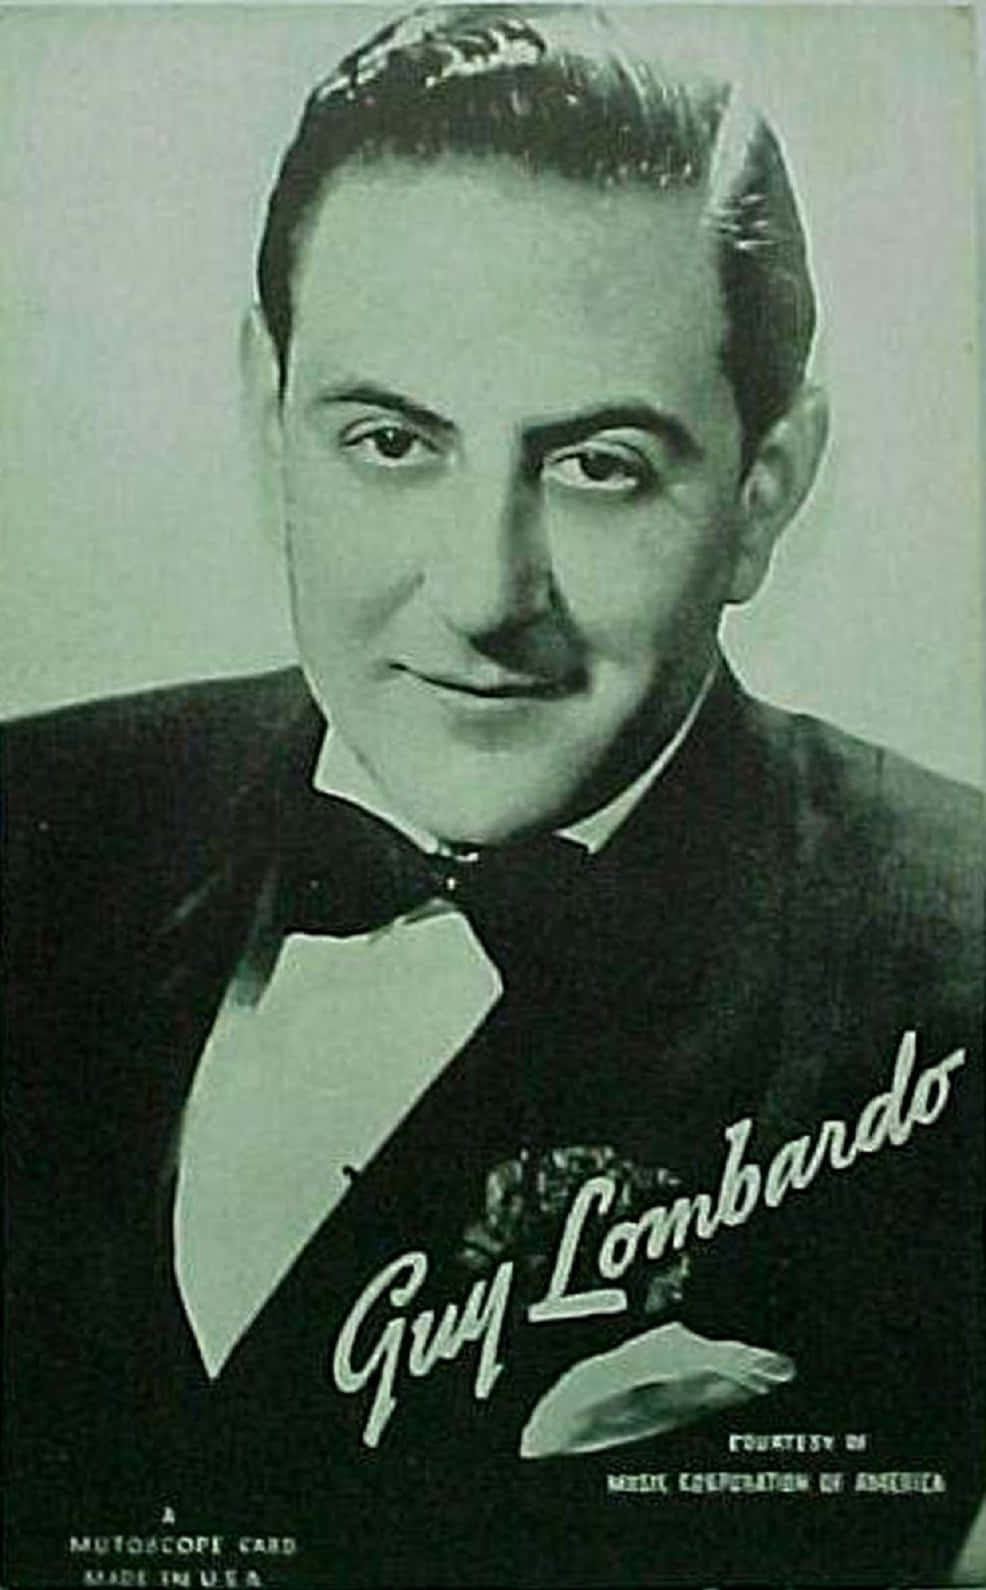 Guy Lombardo Mutoscope Card Wallpaper